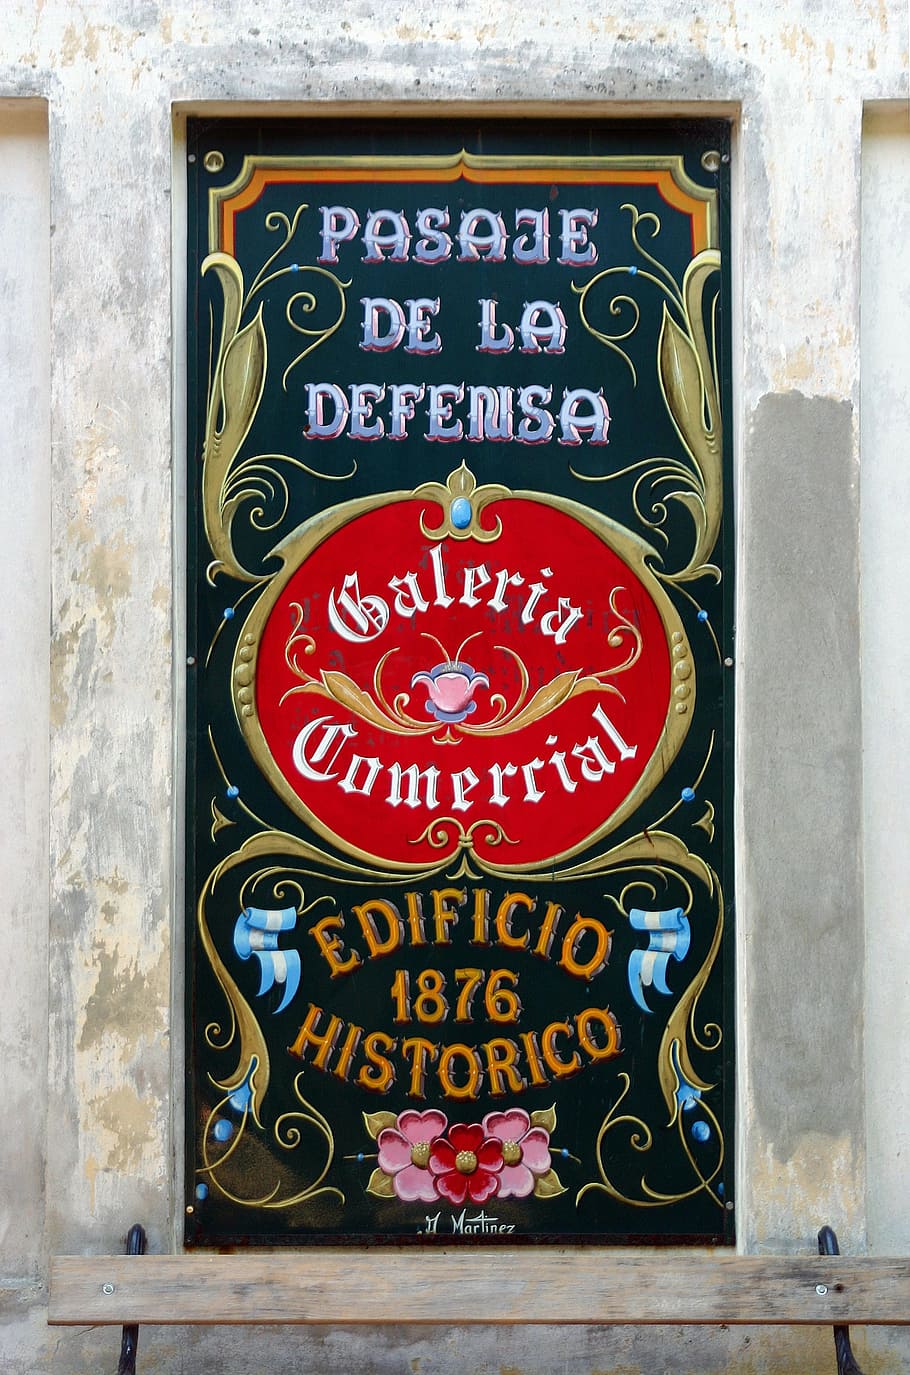 argentina, buenos aires, san telmo, barrio san telmo, defense, passage of the defense, commercial gallery, trade, historic building, 1876